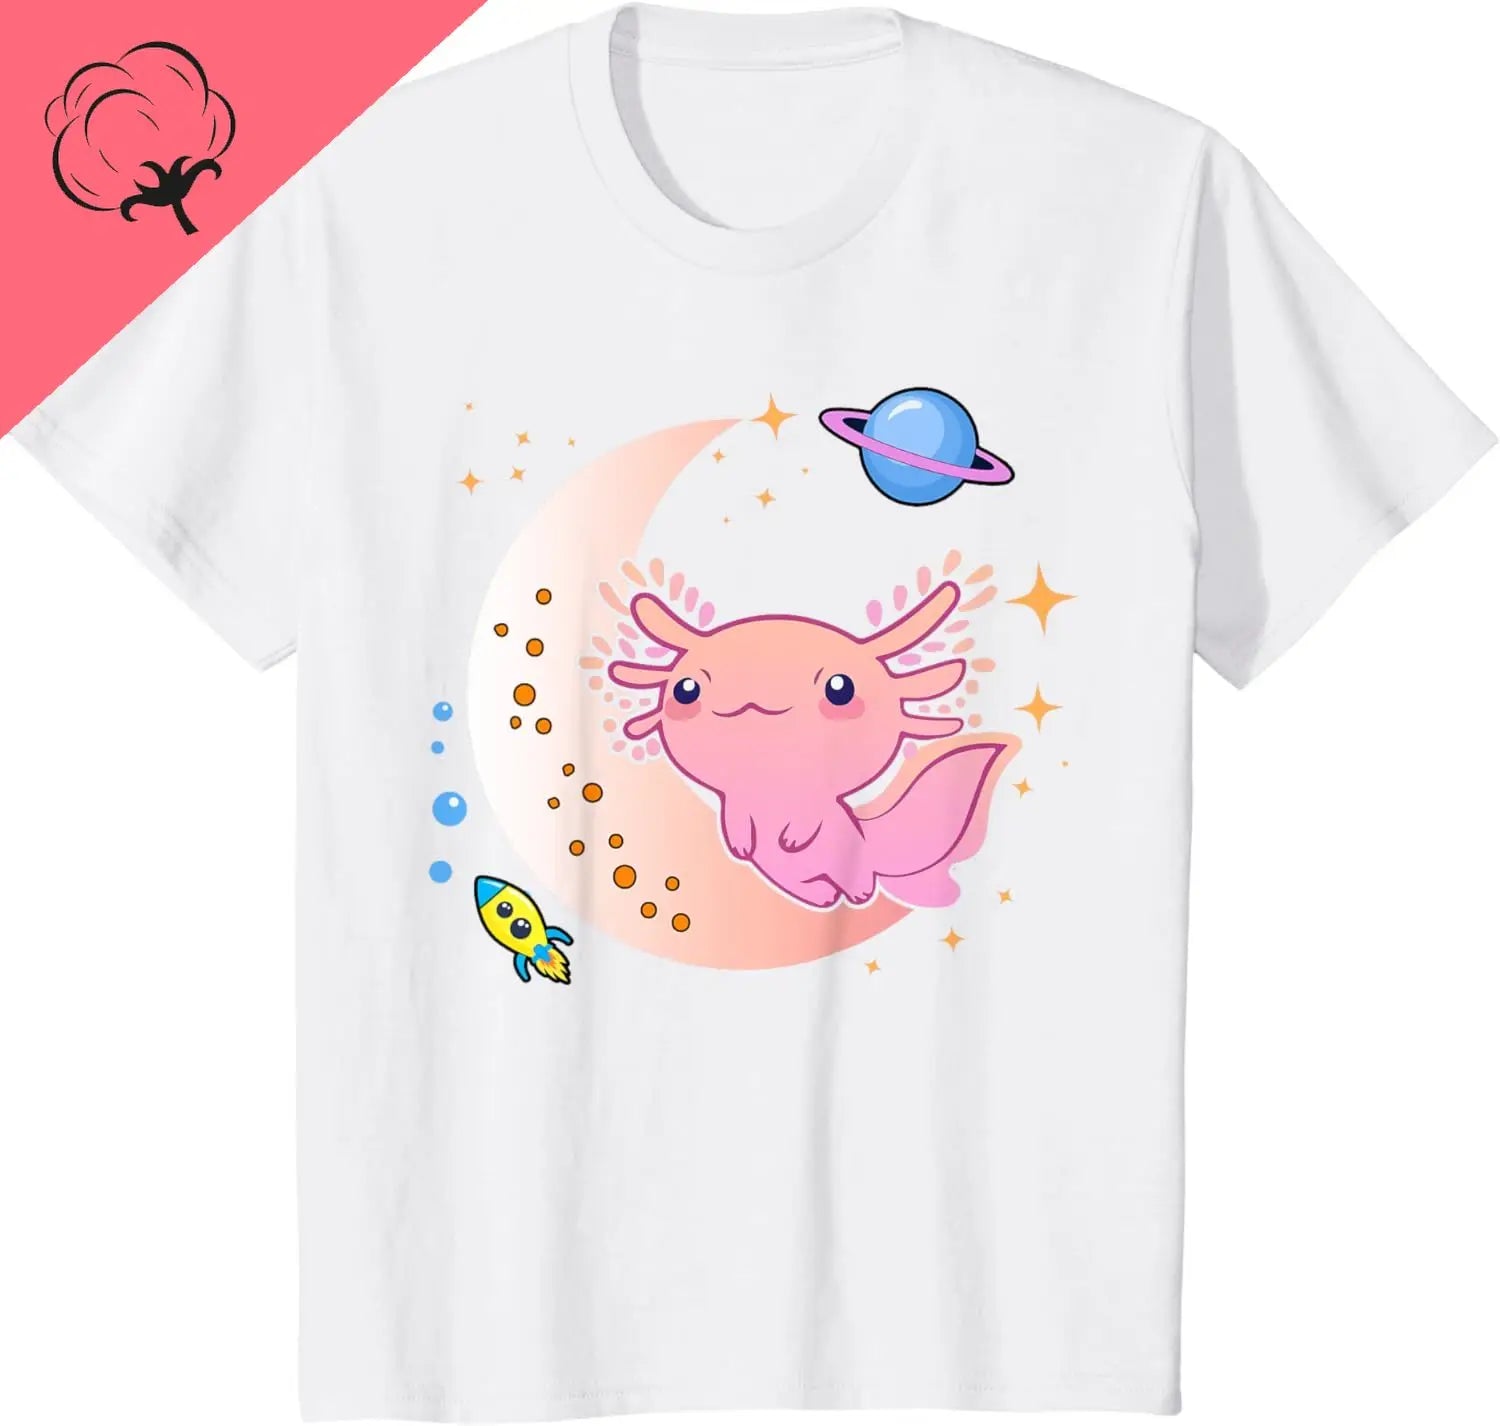 Space Axolotl Graphic Tee - Kawaii Pastel Goth T-shirt - White / XXXL - T-Shirts - Shirts & Tops - 2 - 2024